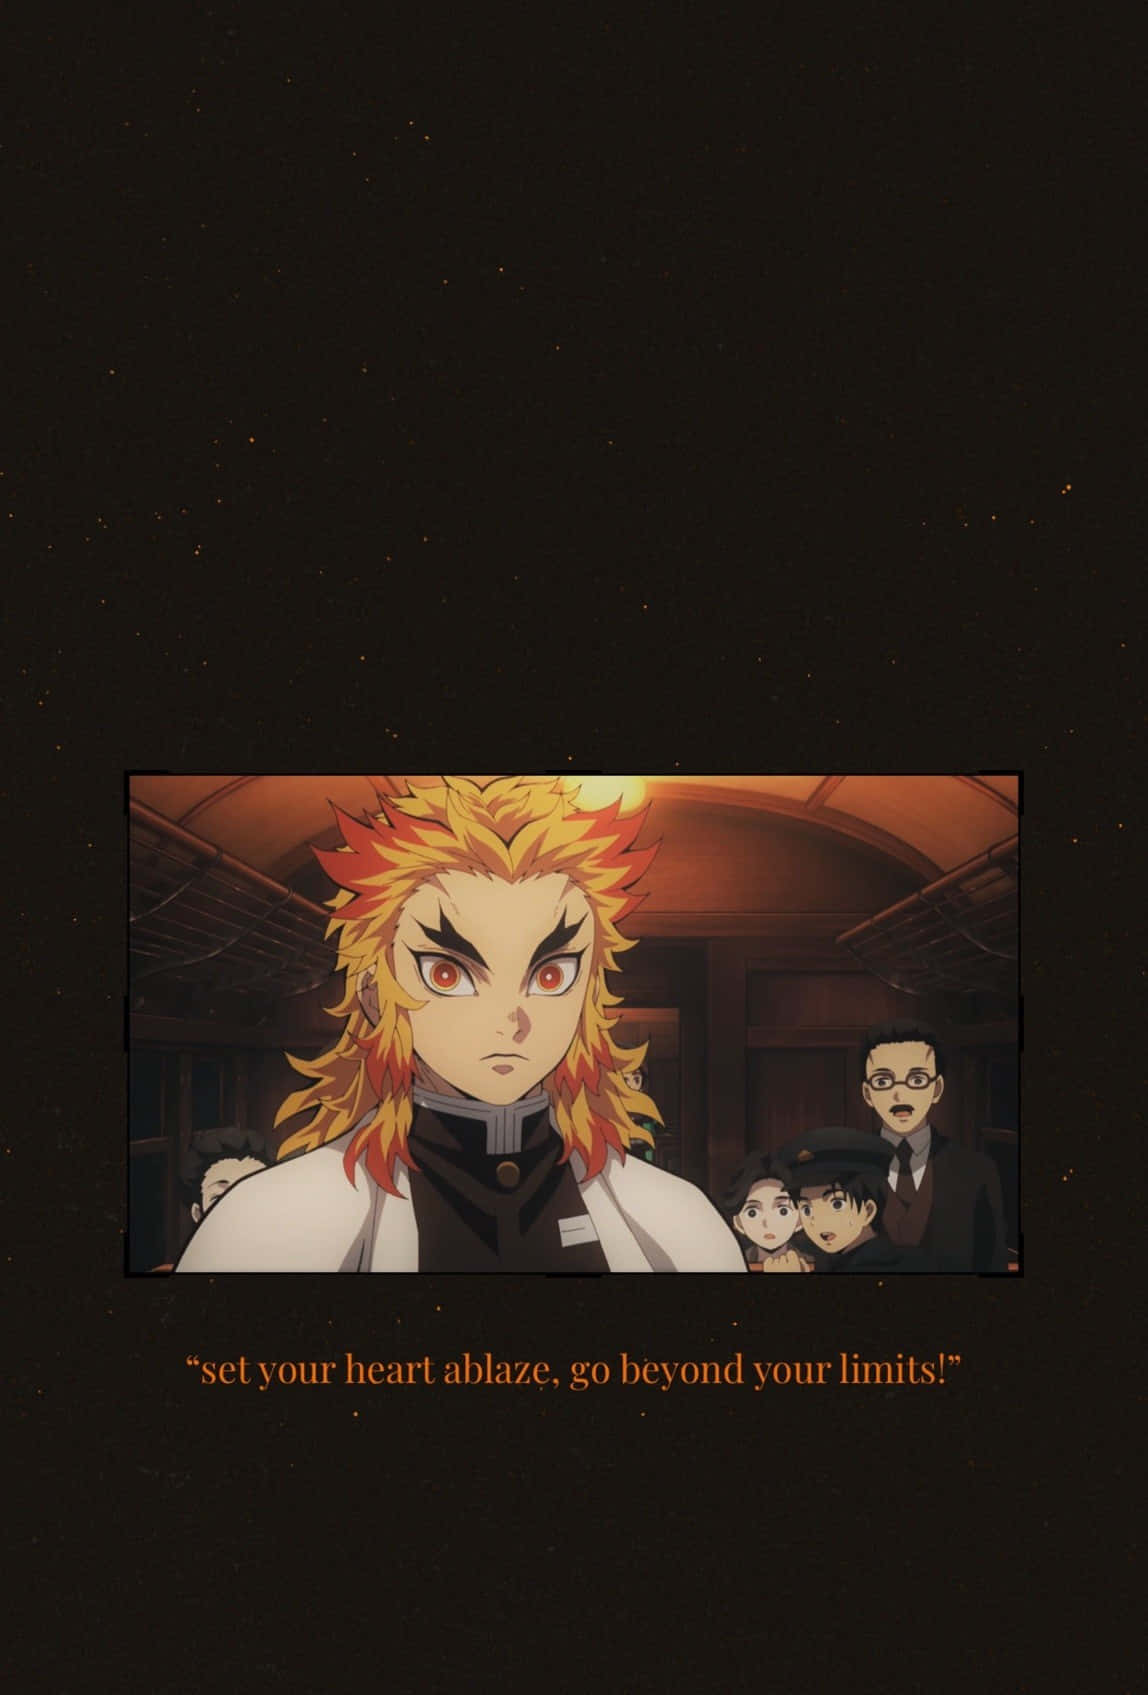 Inspiring Rengoku Quote on Fire Background Wallpaper